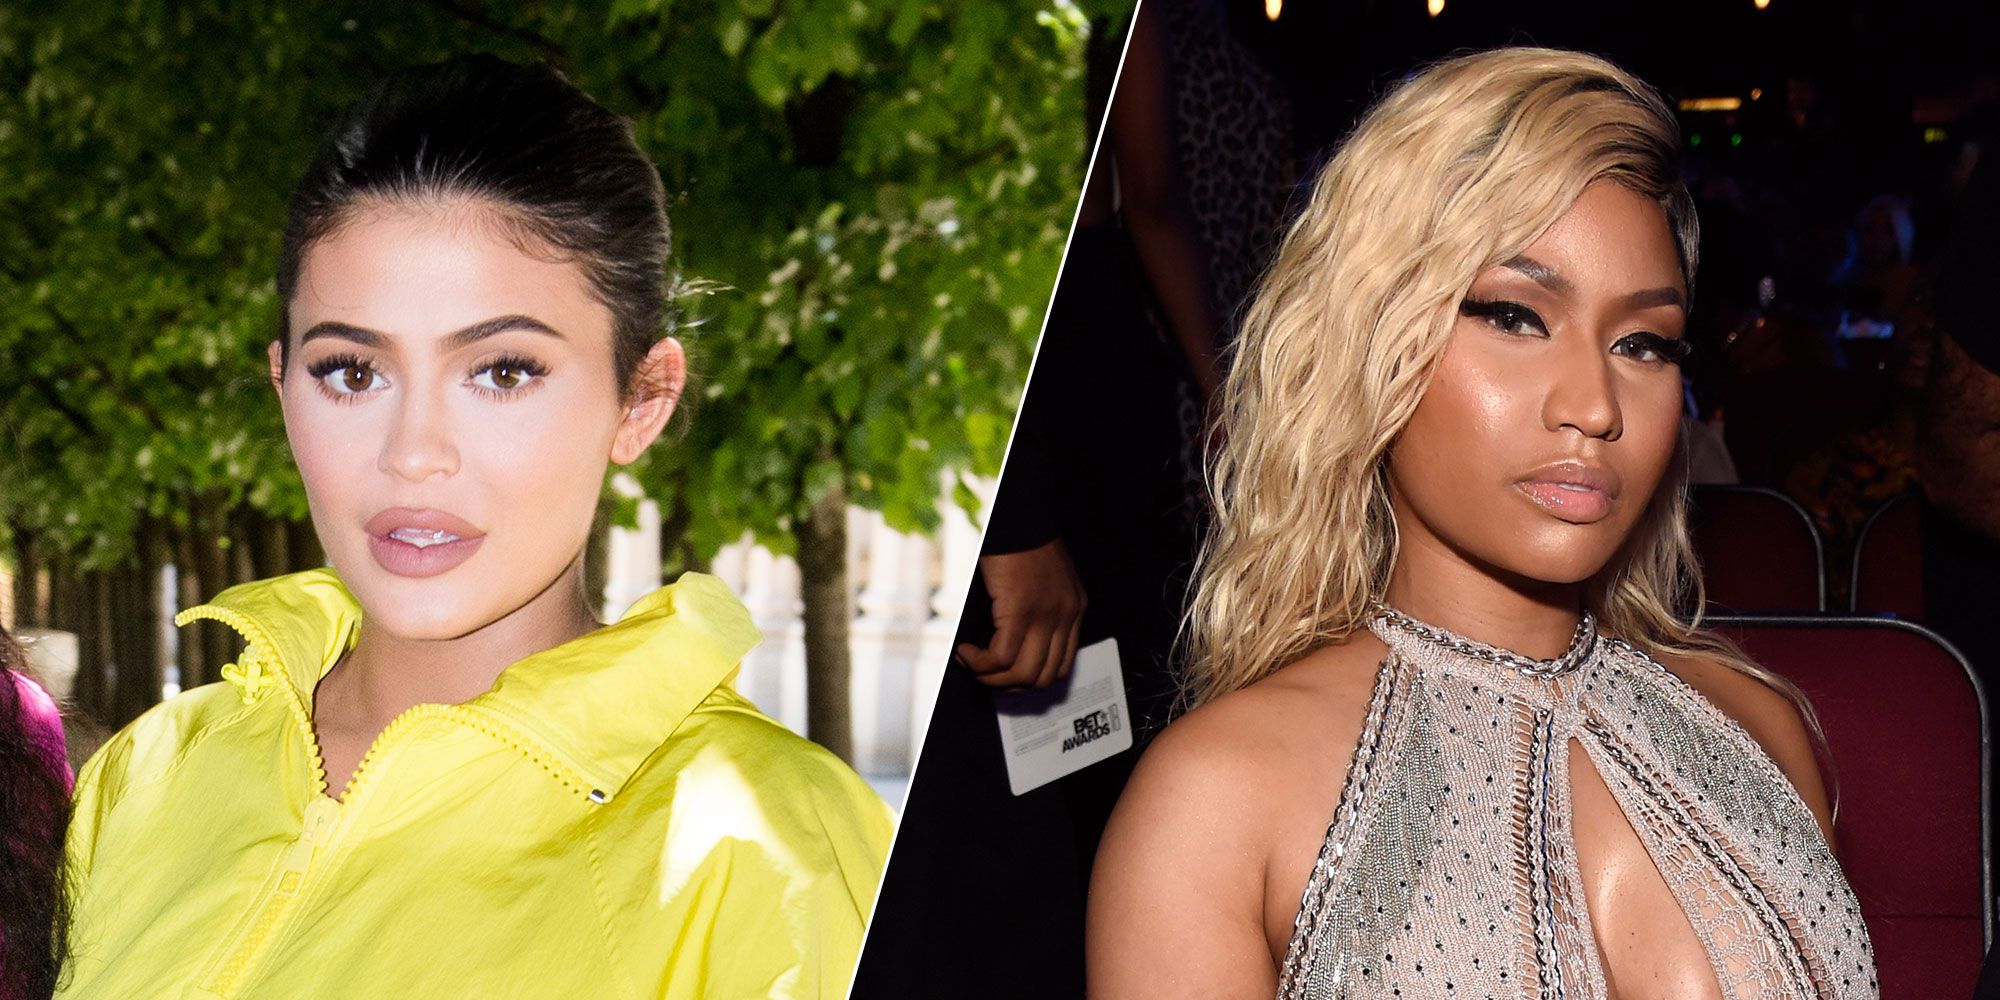 Stars like Beyoncé, Nicki Minaj and Kylie Jenner are bringing back